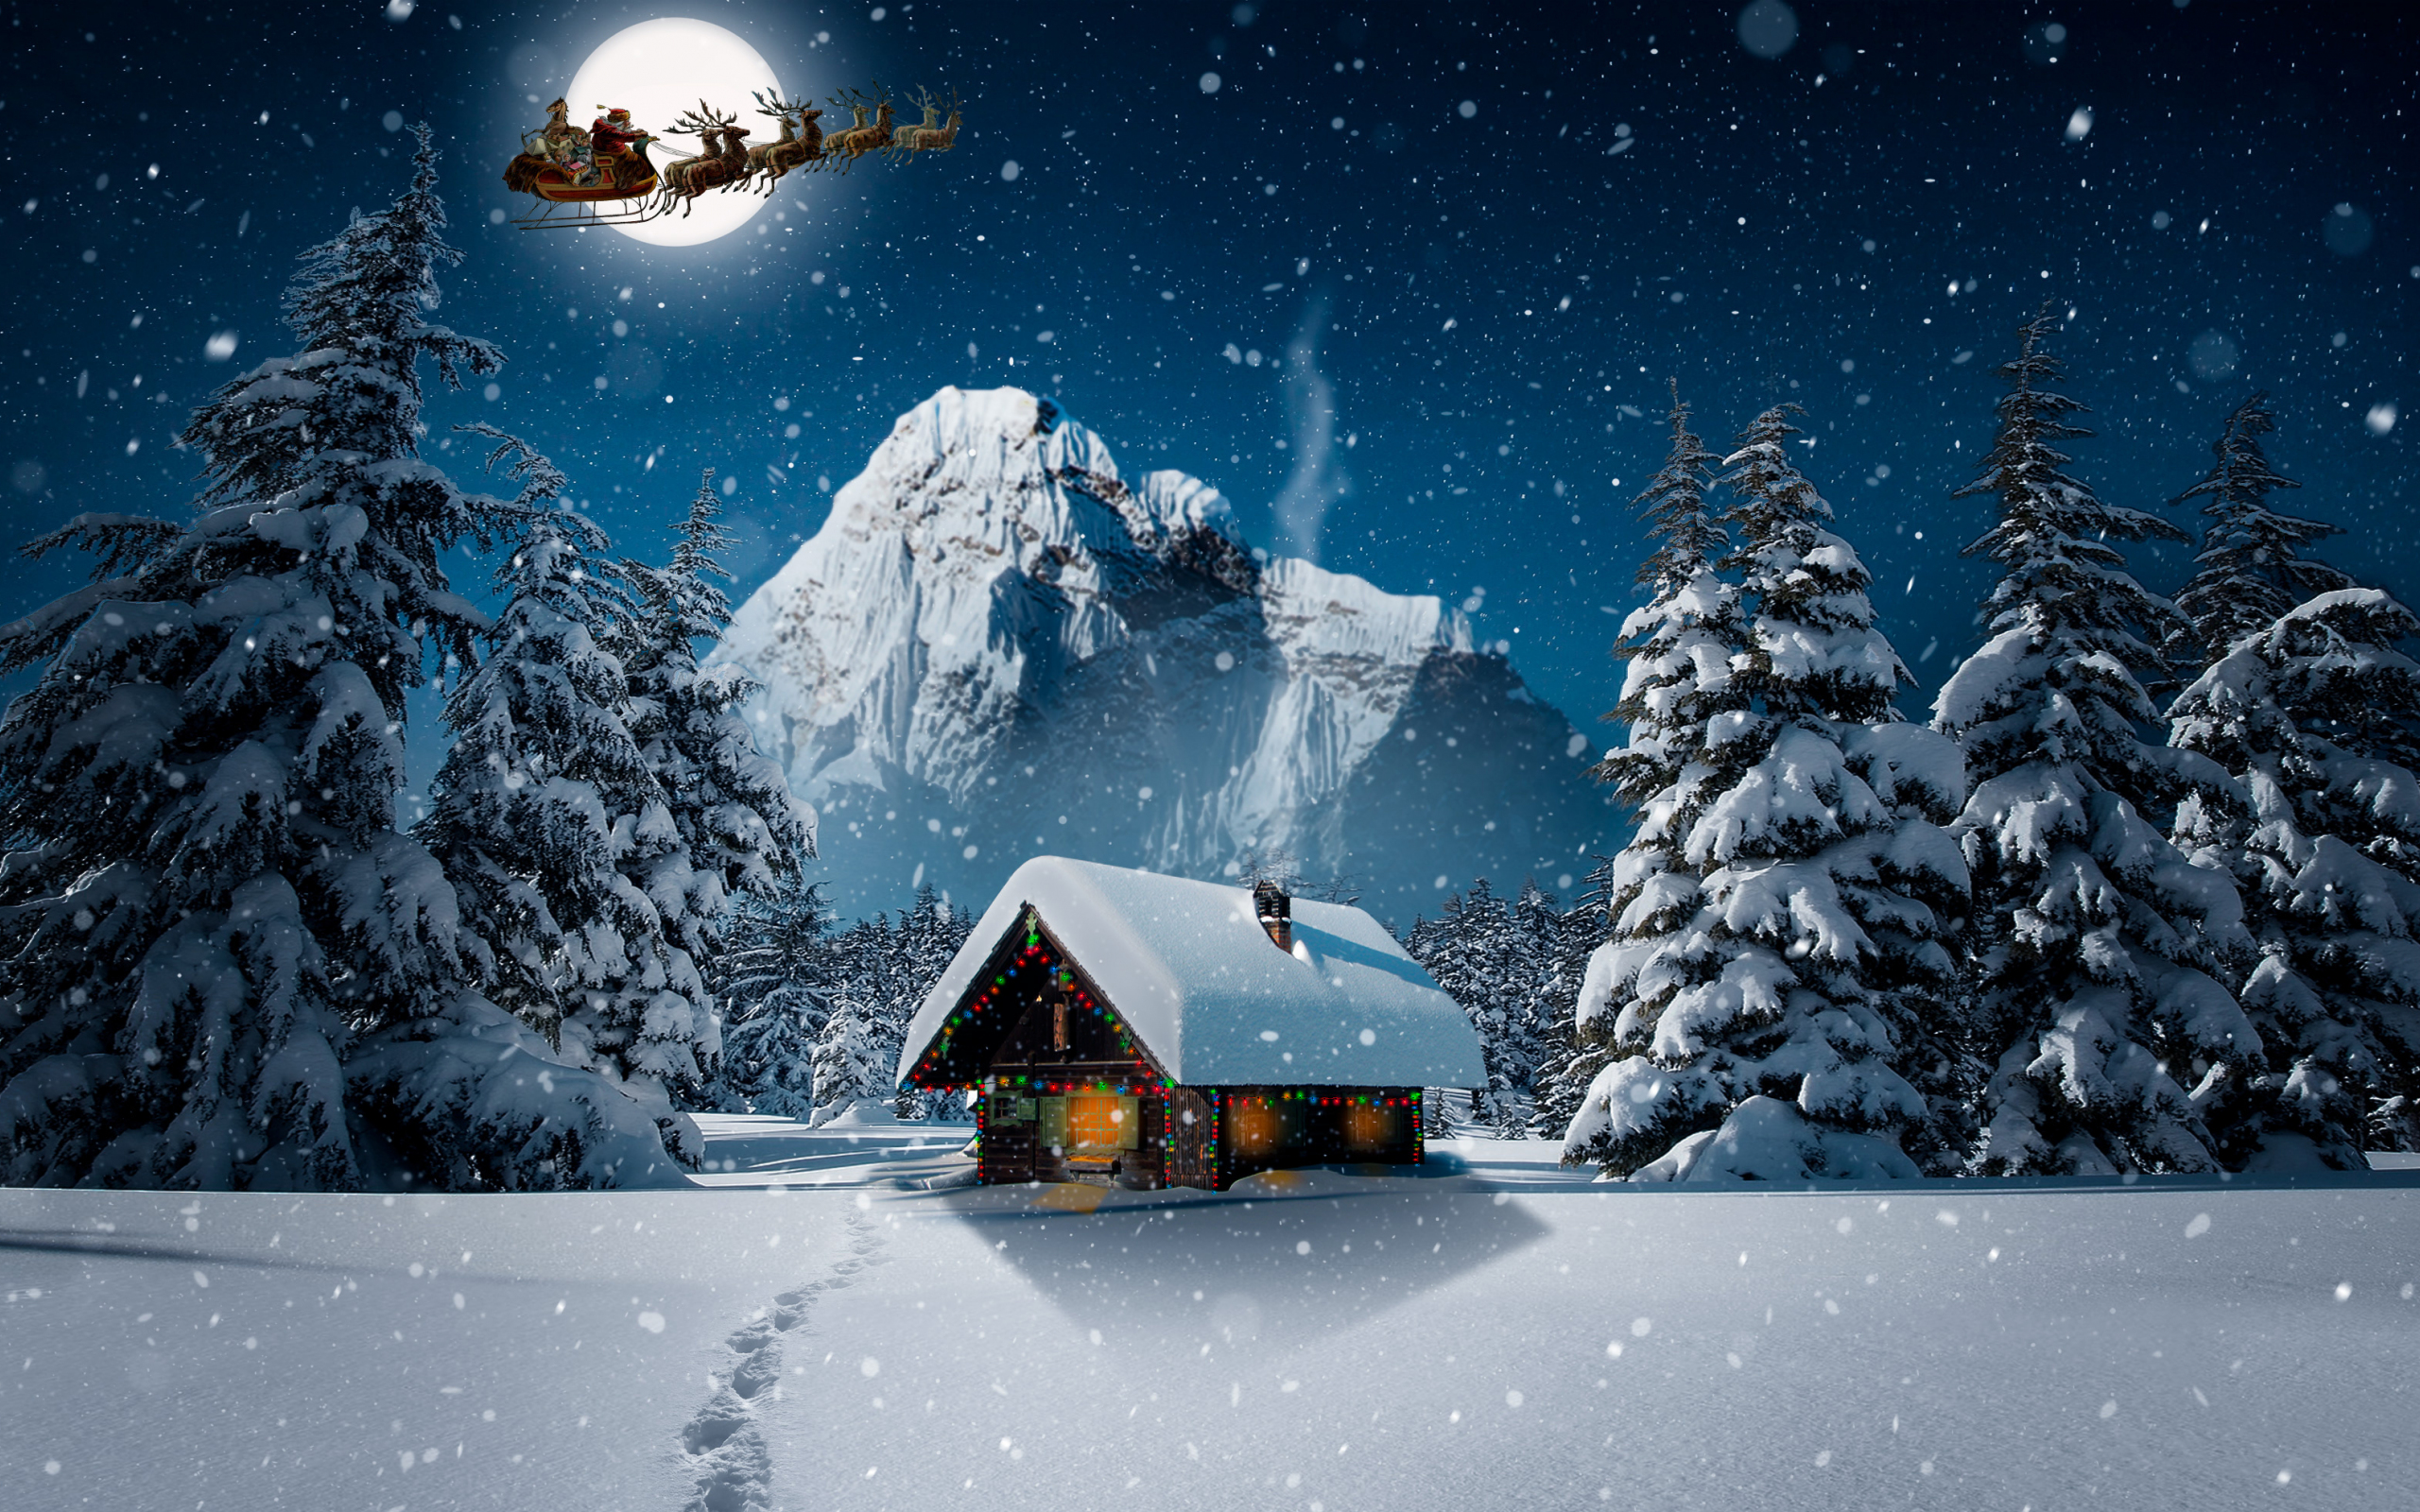 Download 2560x1600 wallpaper snowfall, winter, hut, house, winter, christmas, dual wide, widescreen 16: widescreen, 2560x1600 HD image, background, 17253